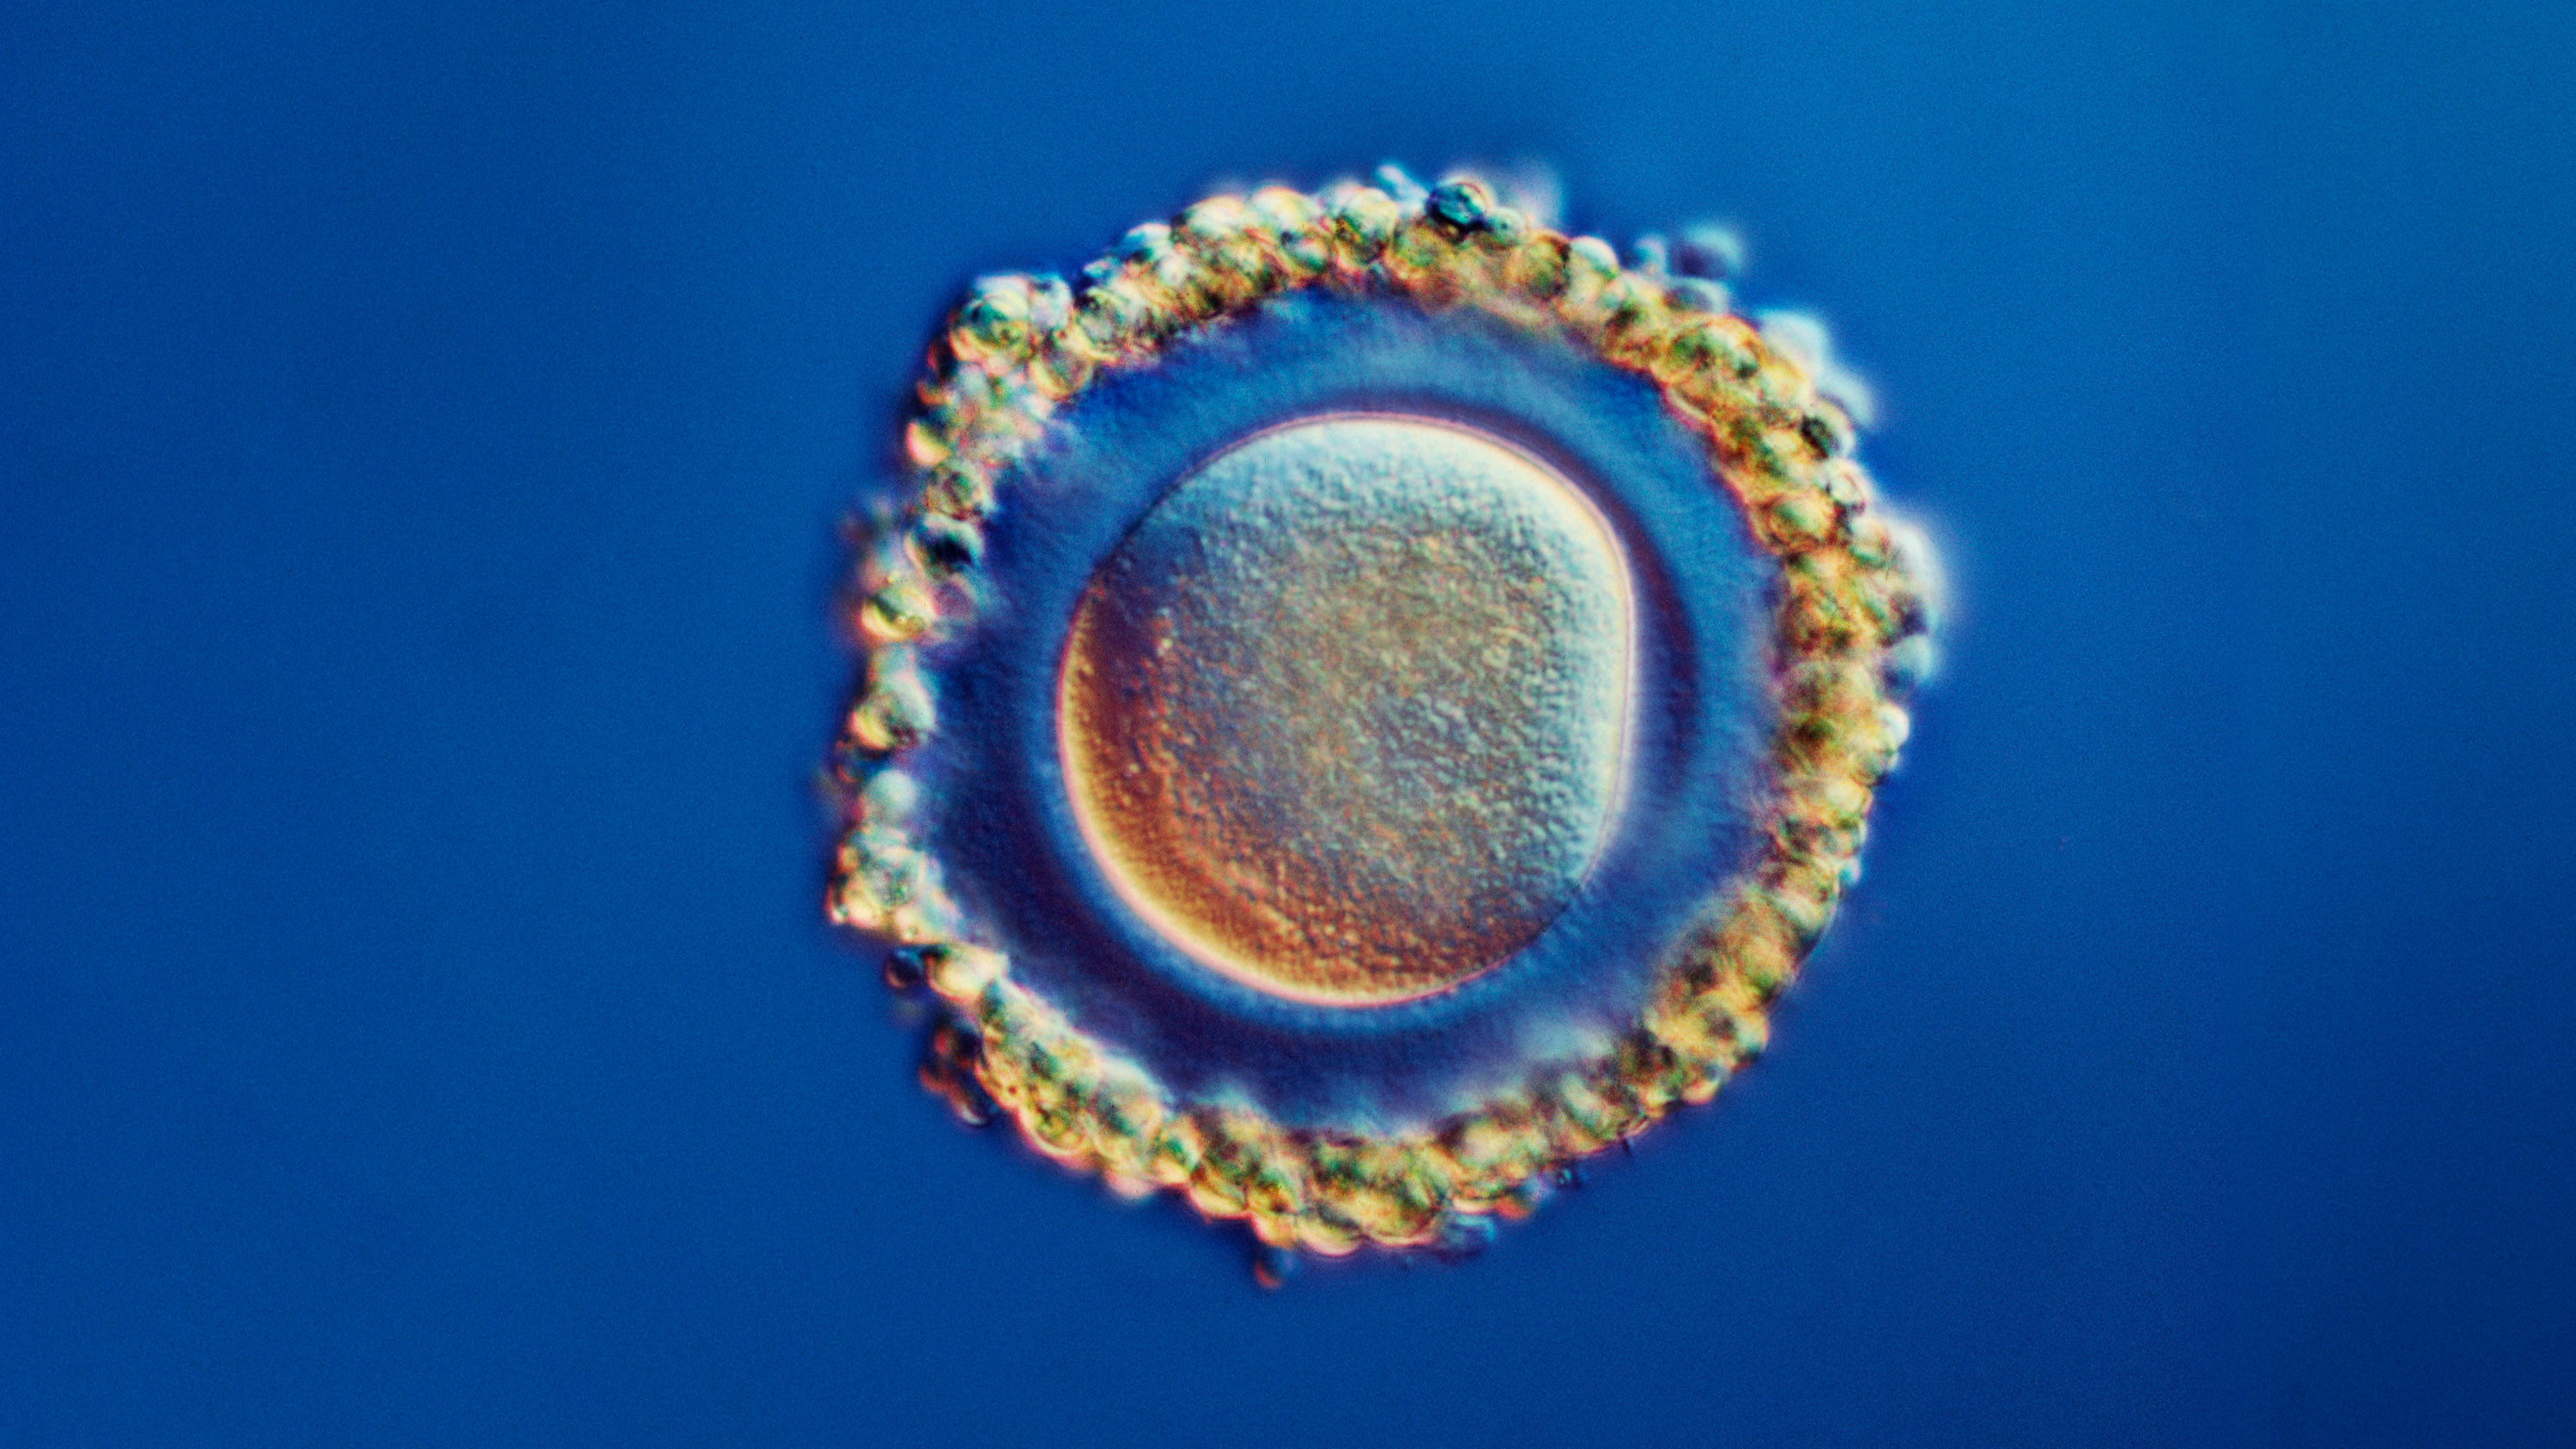 light micrograph of a mature human egg